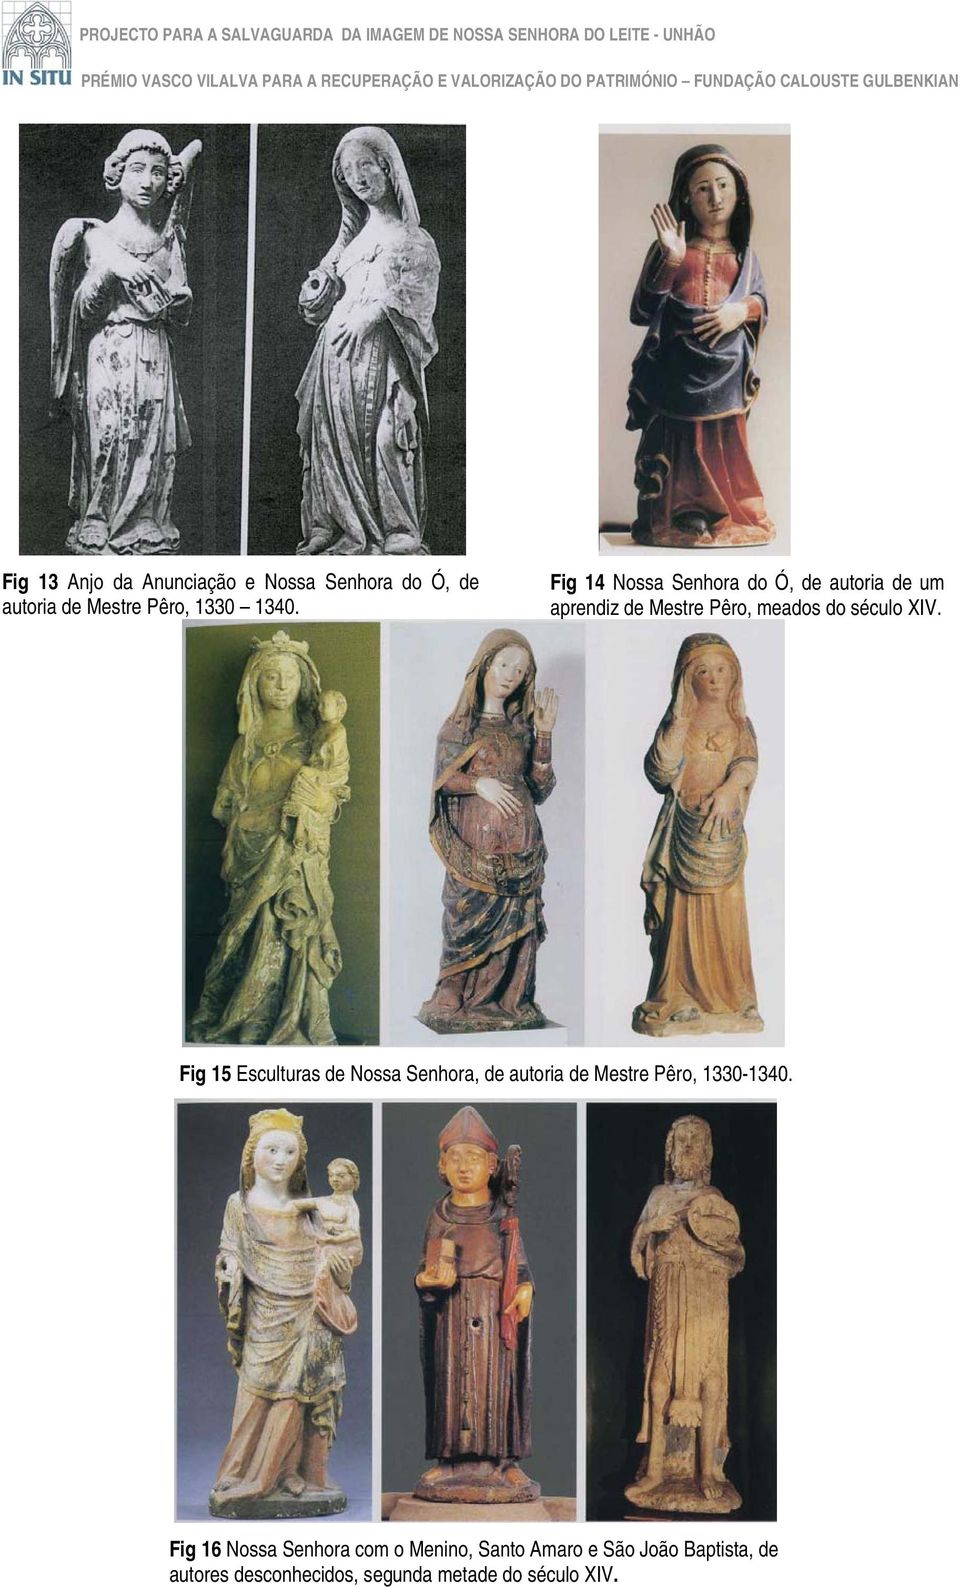 Fig 15 Esculturas de Nossa Senhora, de autoria de Mestre Pêro, 1330-1340.